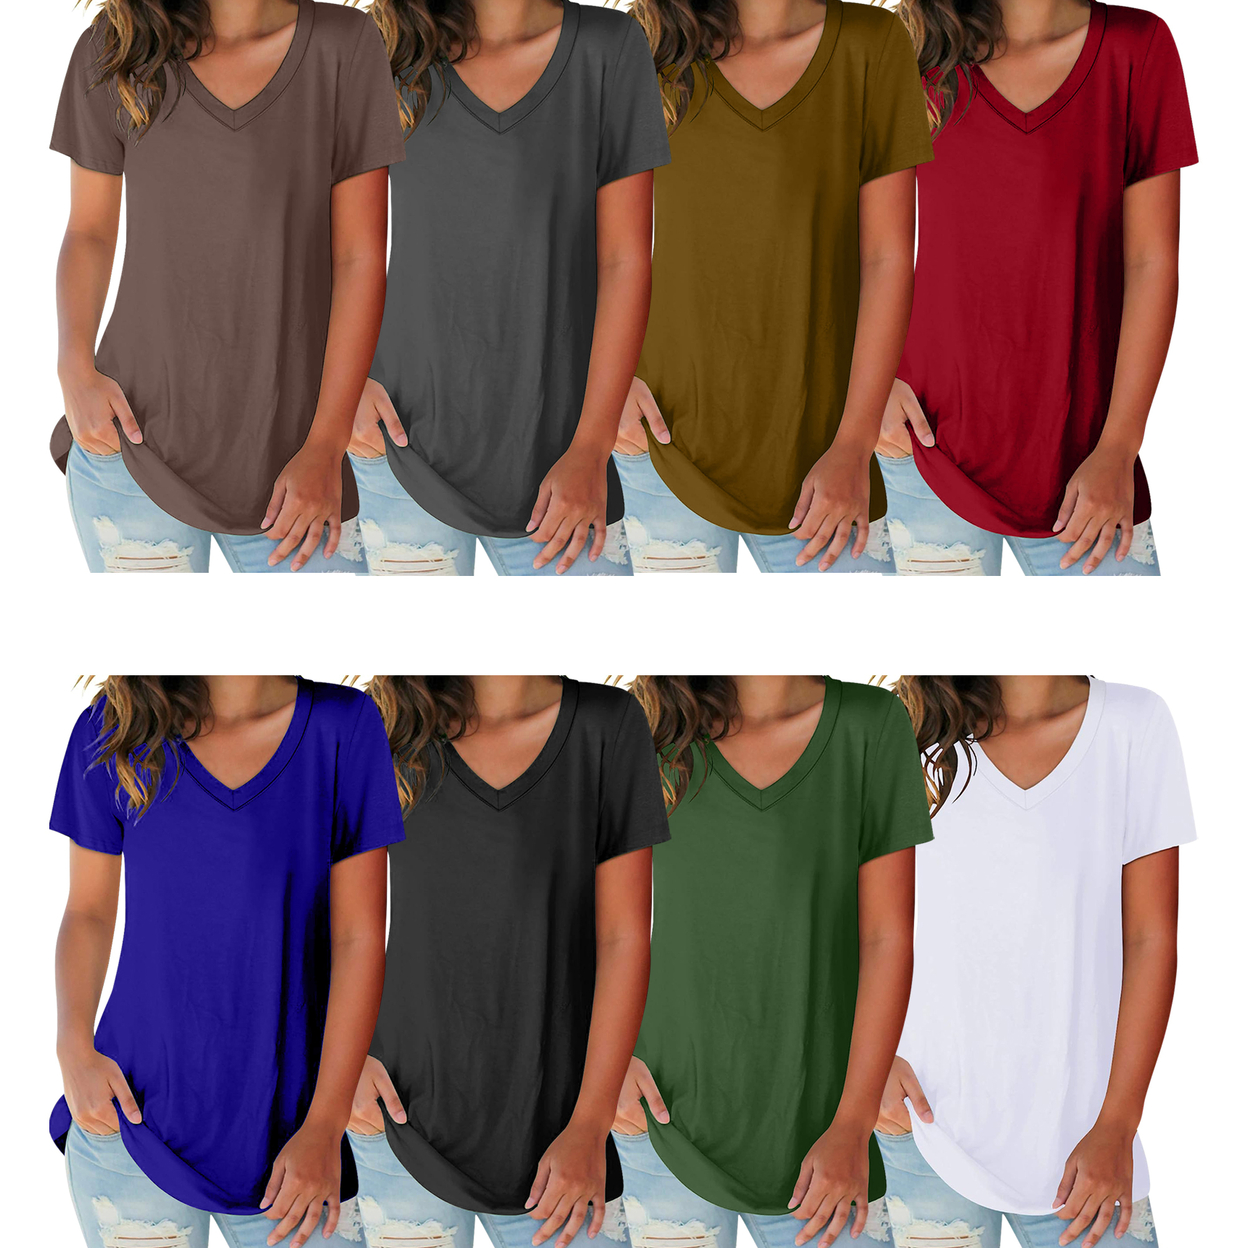 Women's Ultra-Soft Smooth Cotton Blend Basic V-Neck Short Sleeve Shirts - Red, Medium